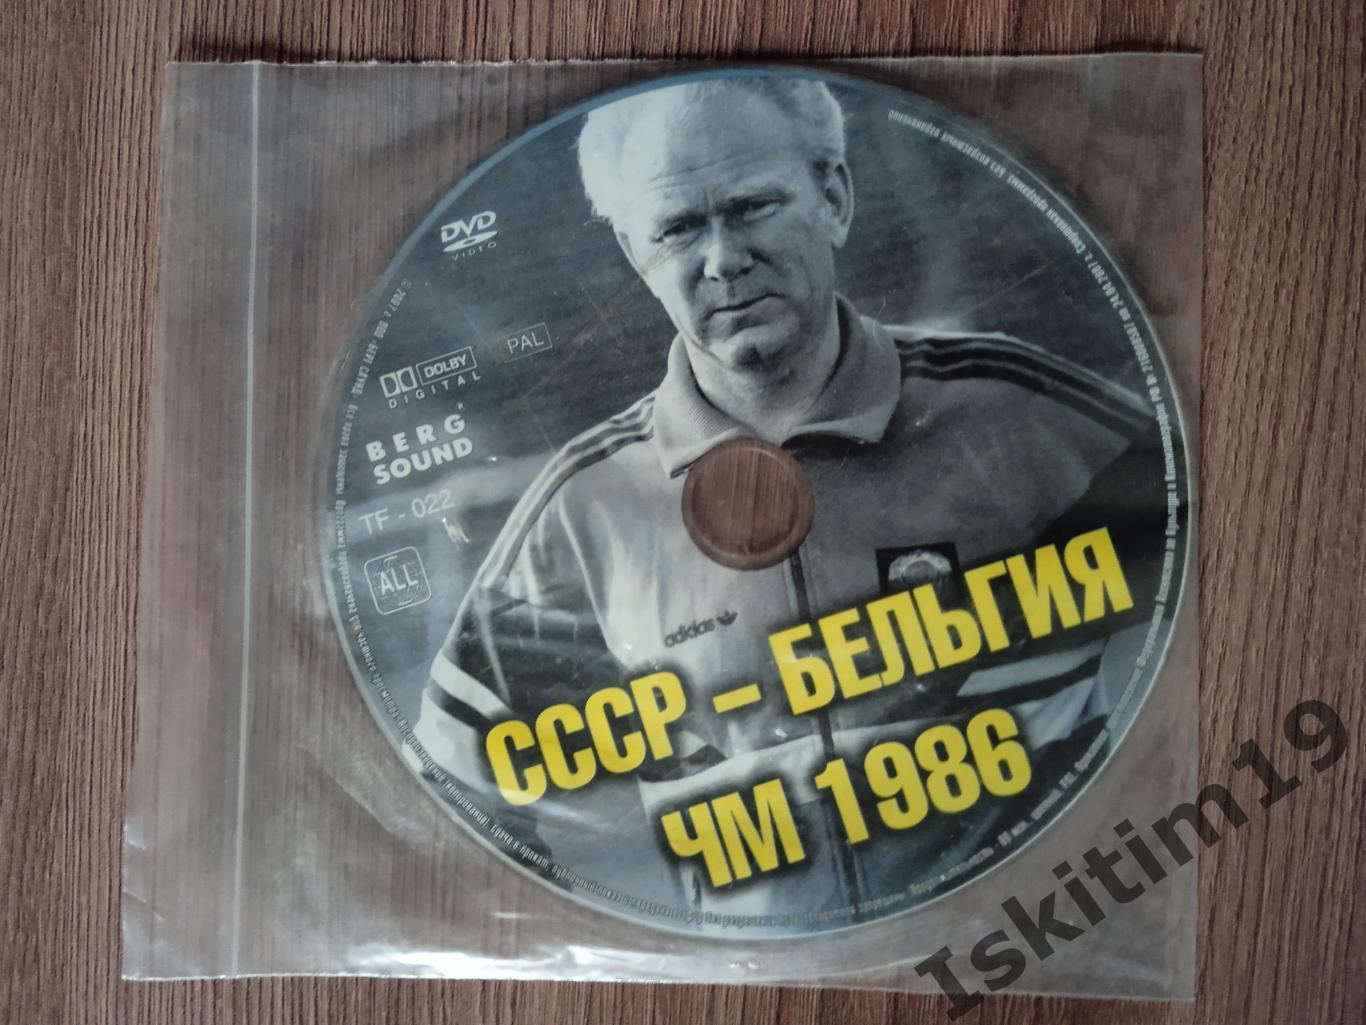 DVD Totalfootball СССР - Бельгия Чемпионат мира по футболу 1986